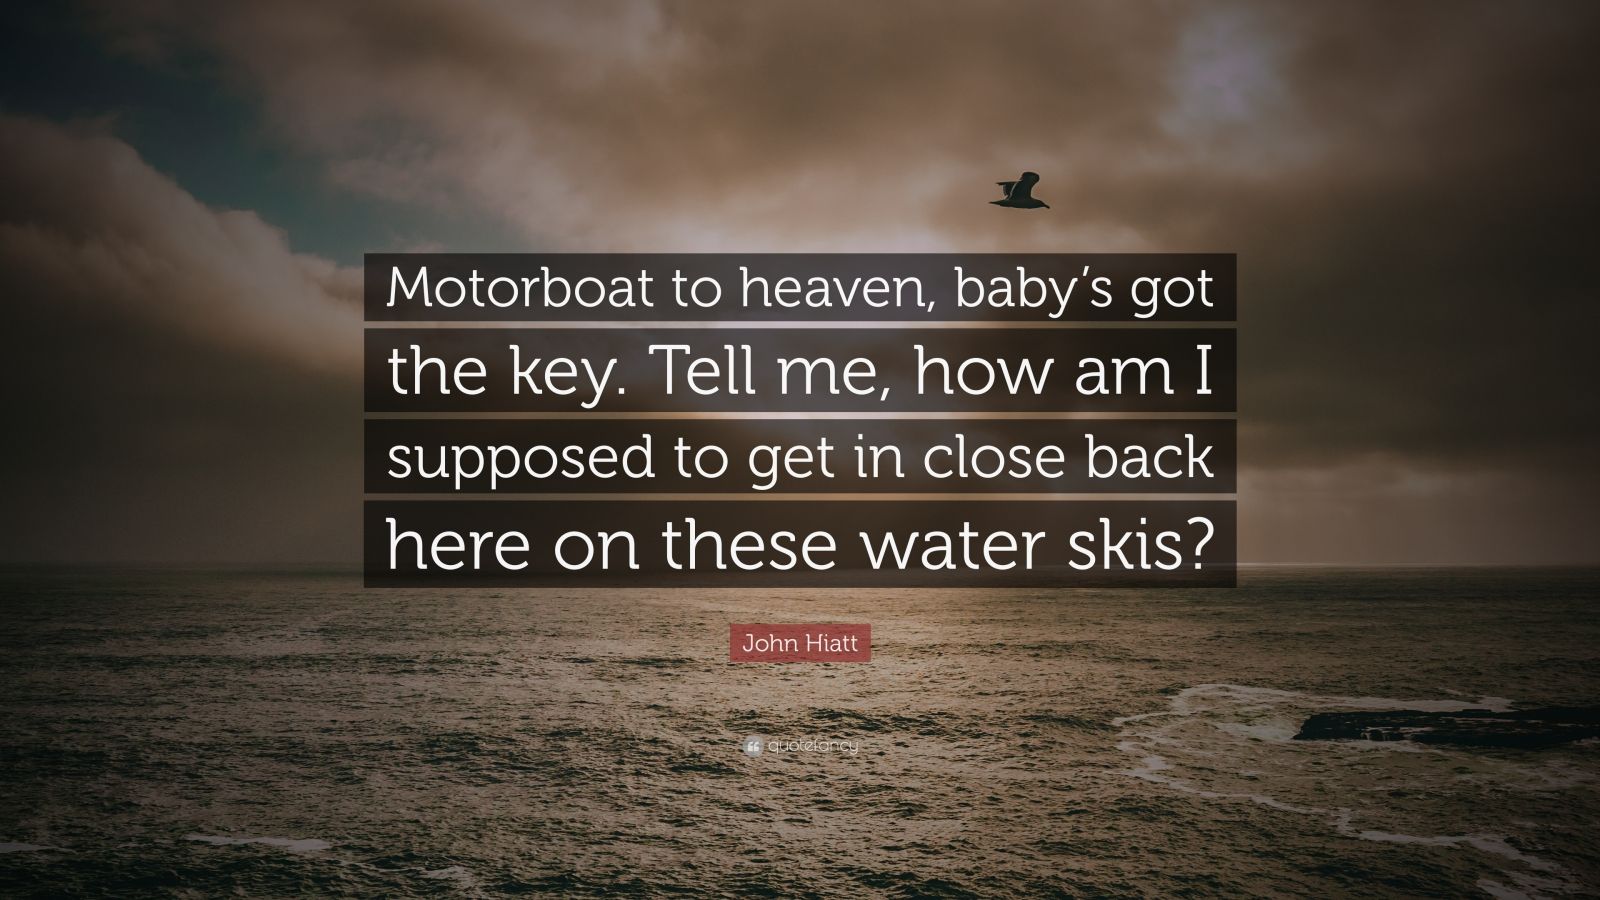 listen baby girl i ain't got a motorboat